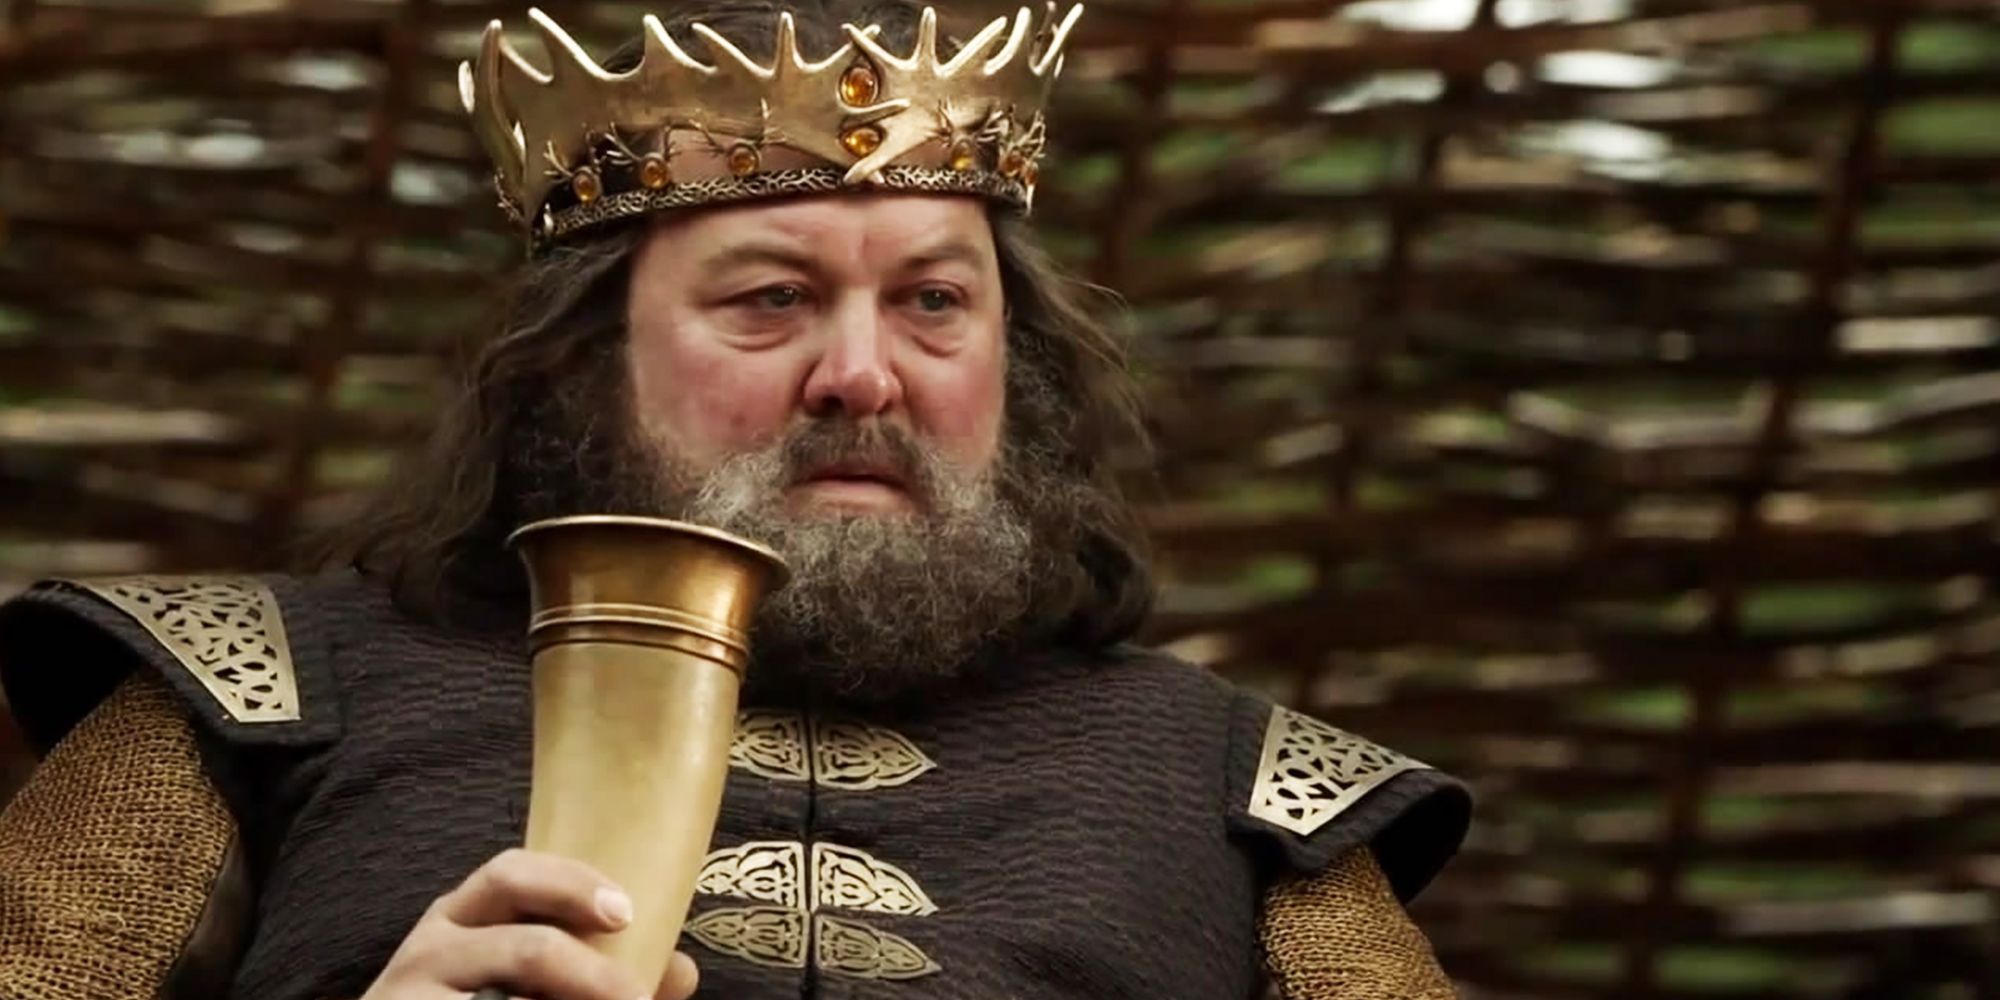 Robert Baratheon drinking and looking impatient in Game of Thrones.